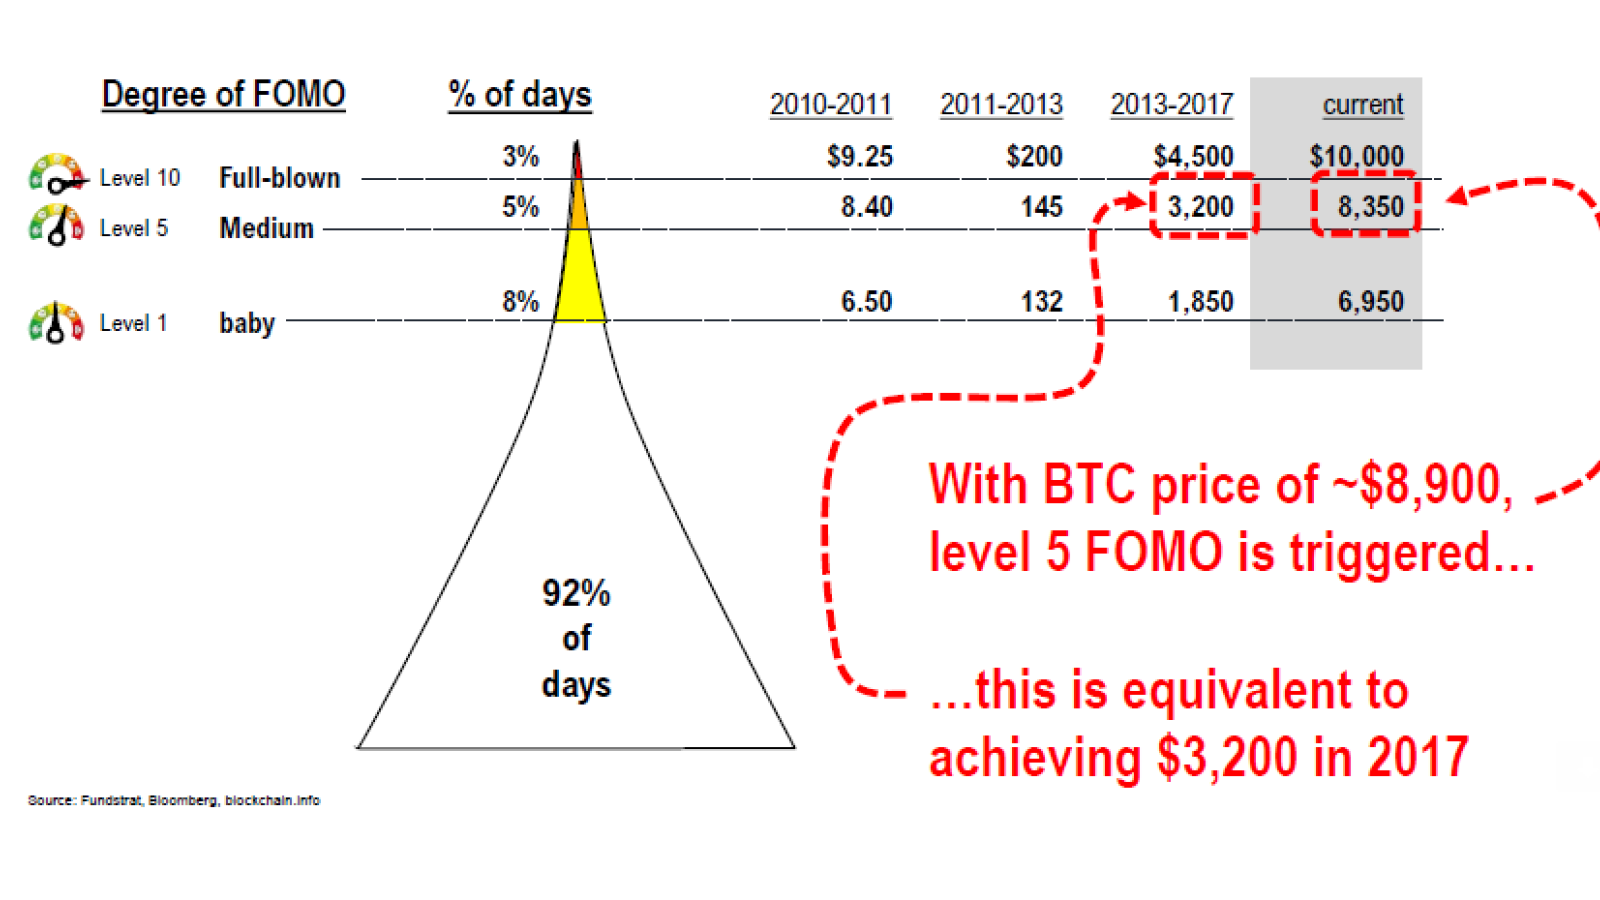 The degrees of Bitcoin FOMO